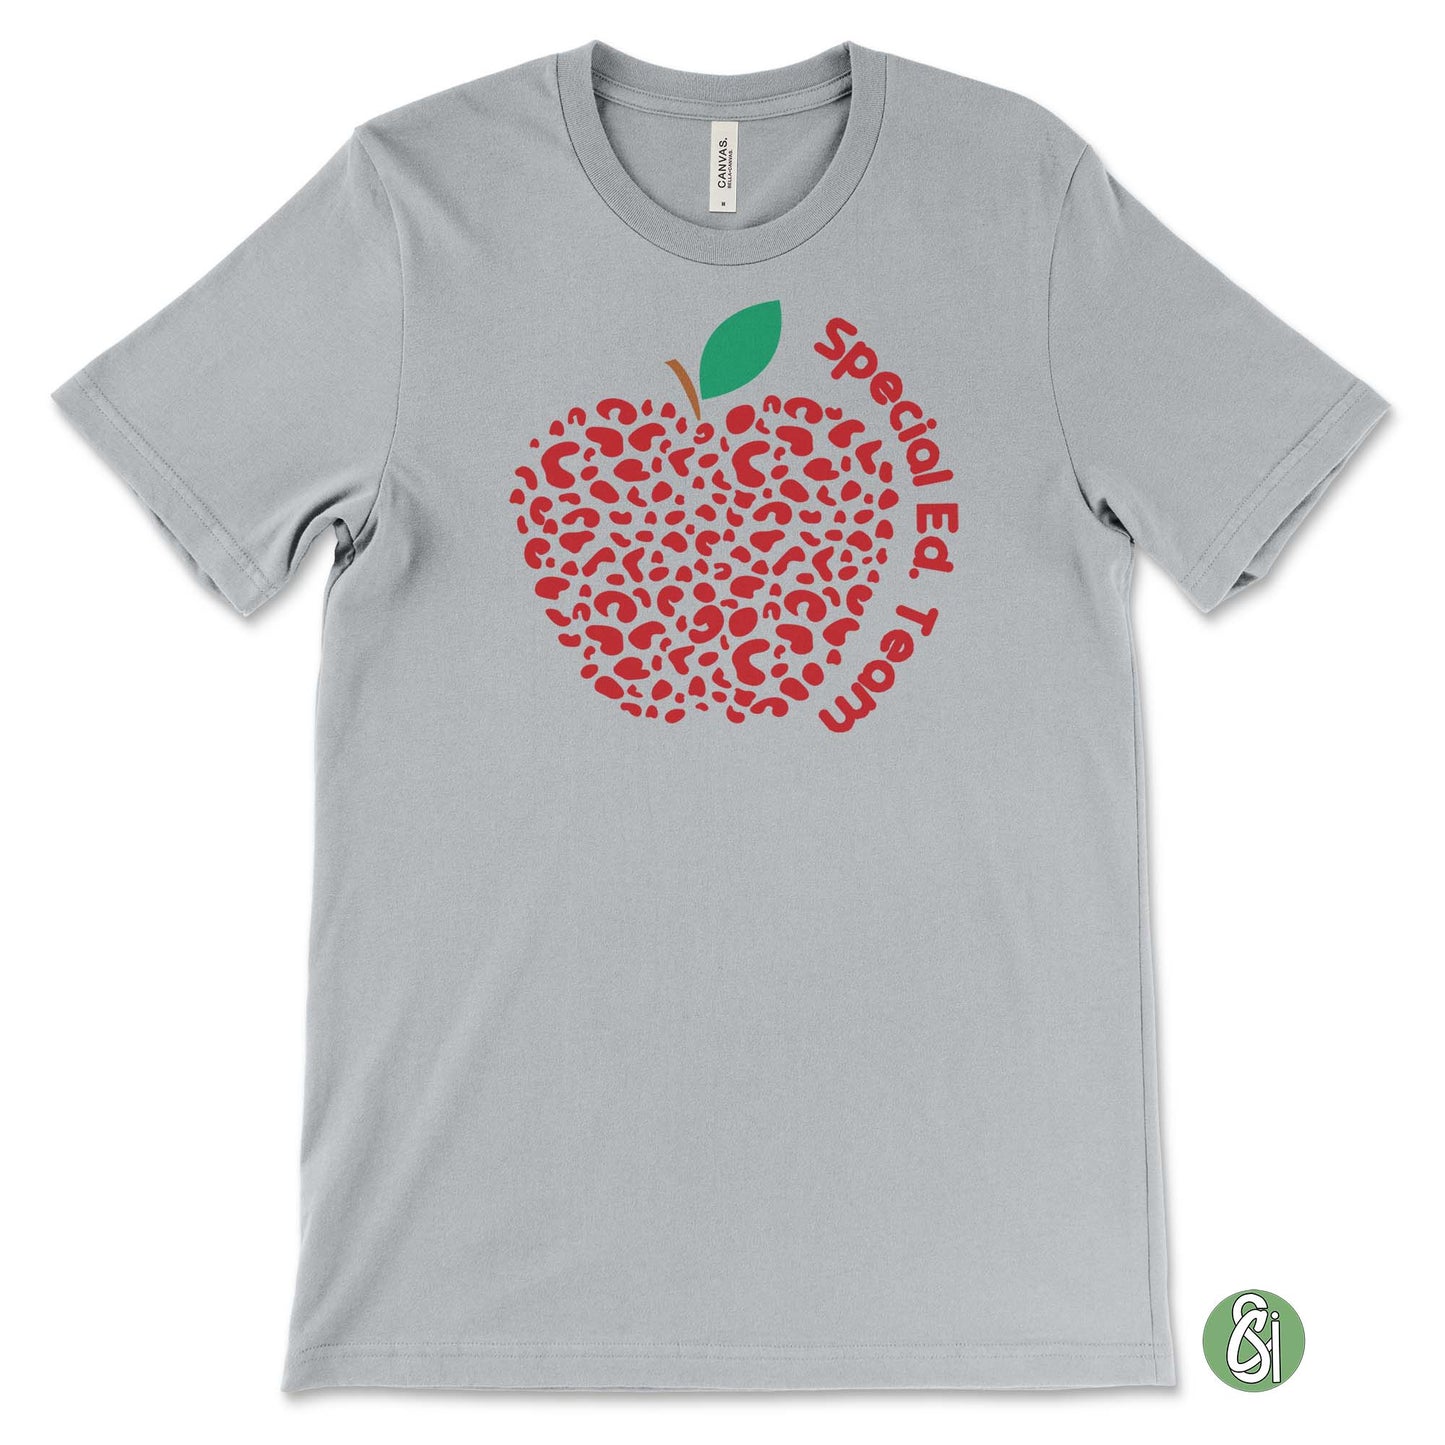 Education team apple shirts